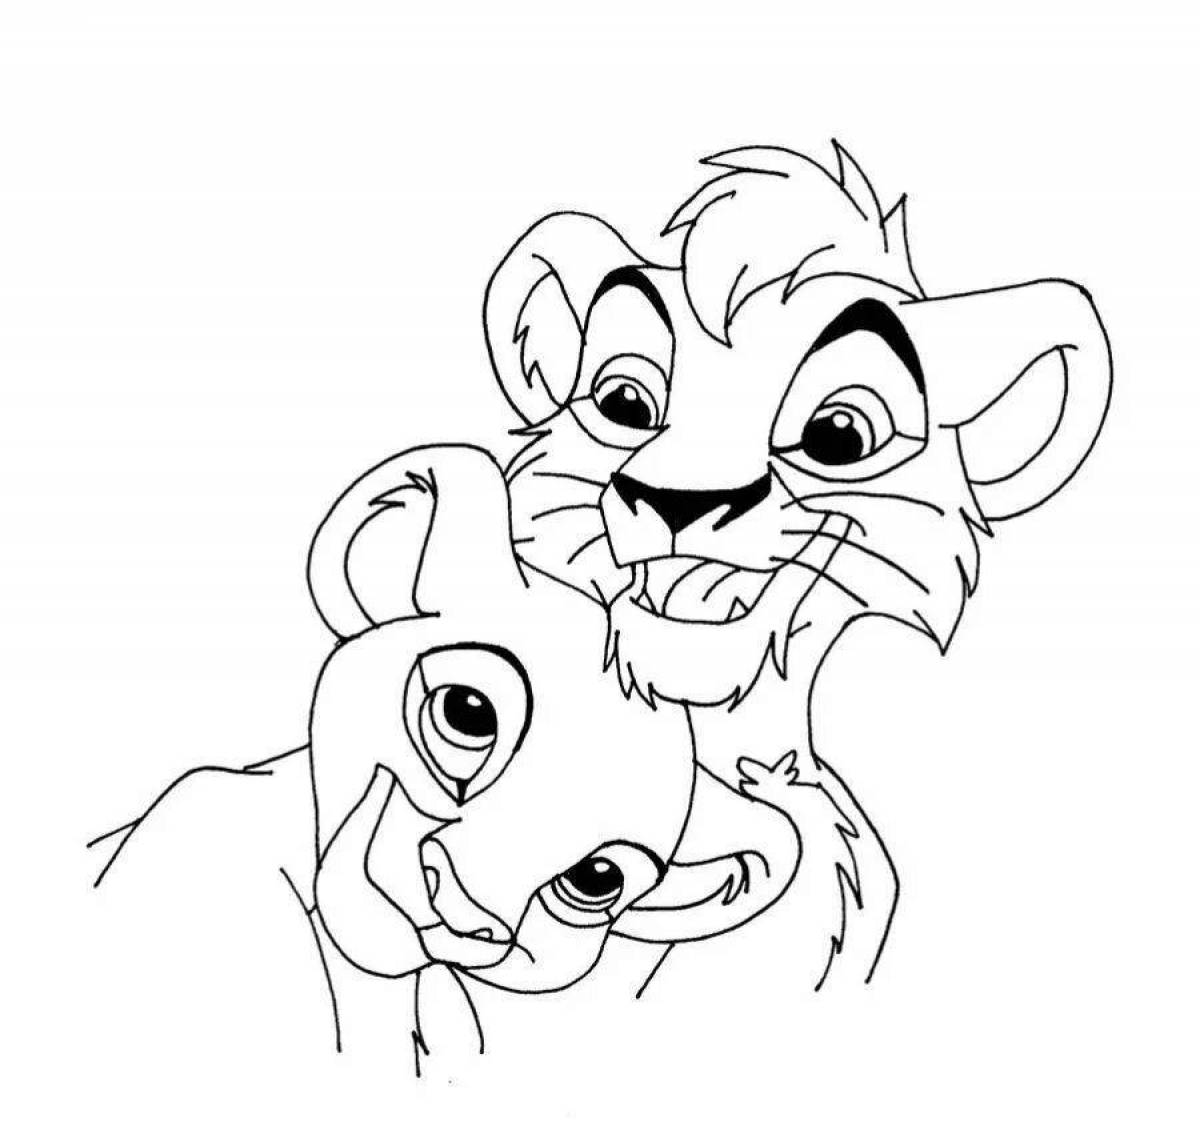 Simba and Nala's amazing coloring book